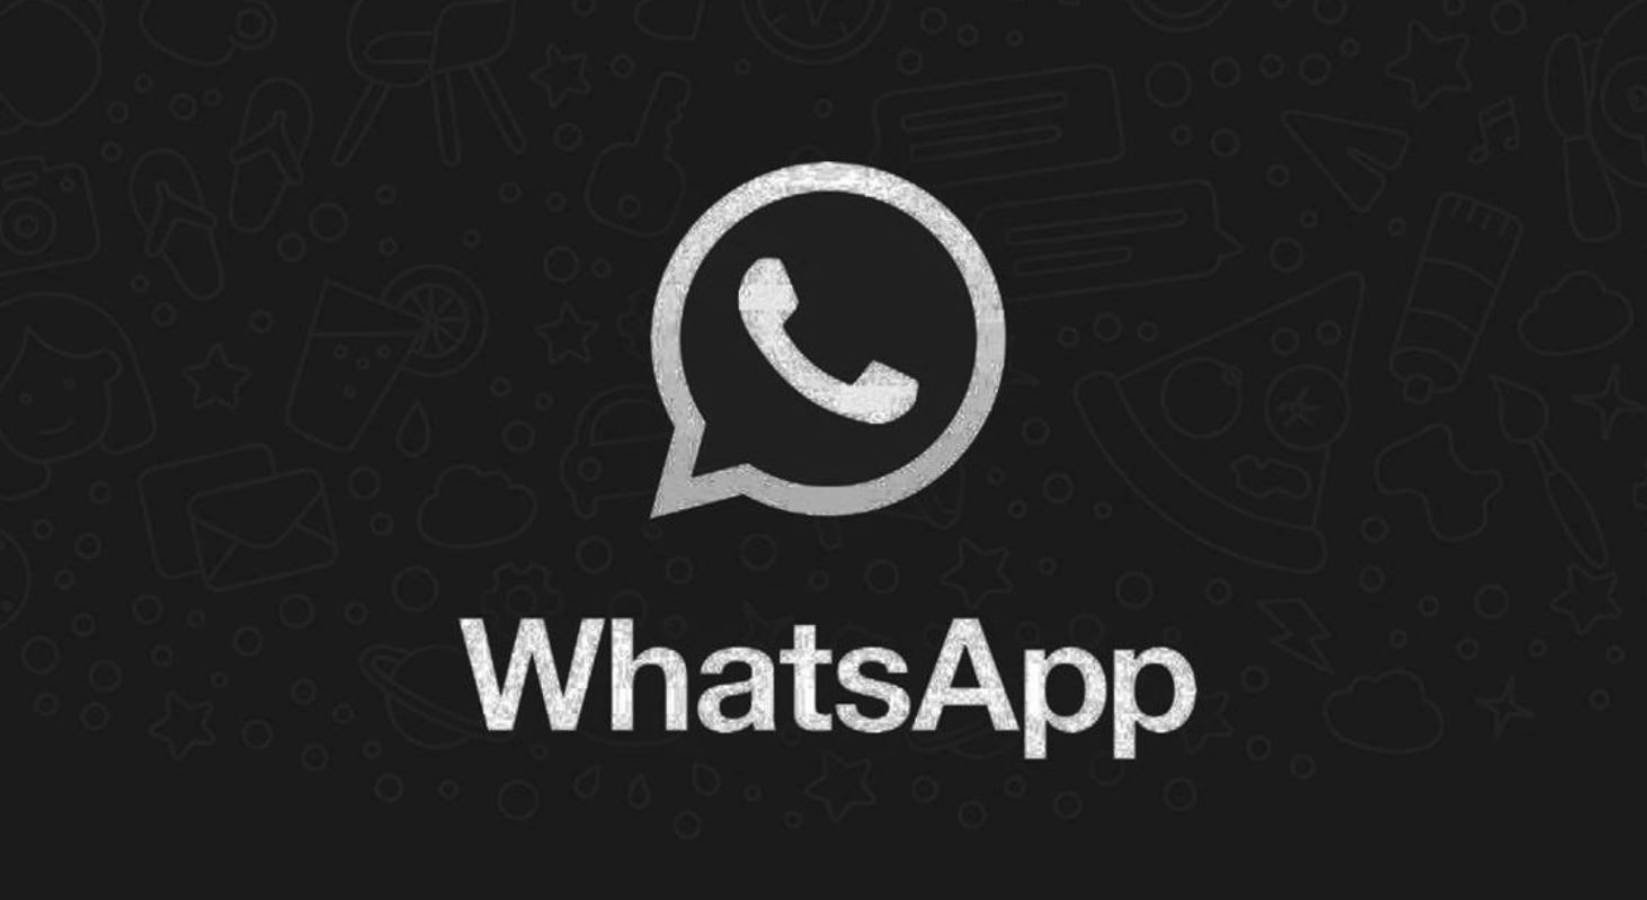 WhatsApp mörkt läge skillnader